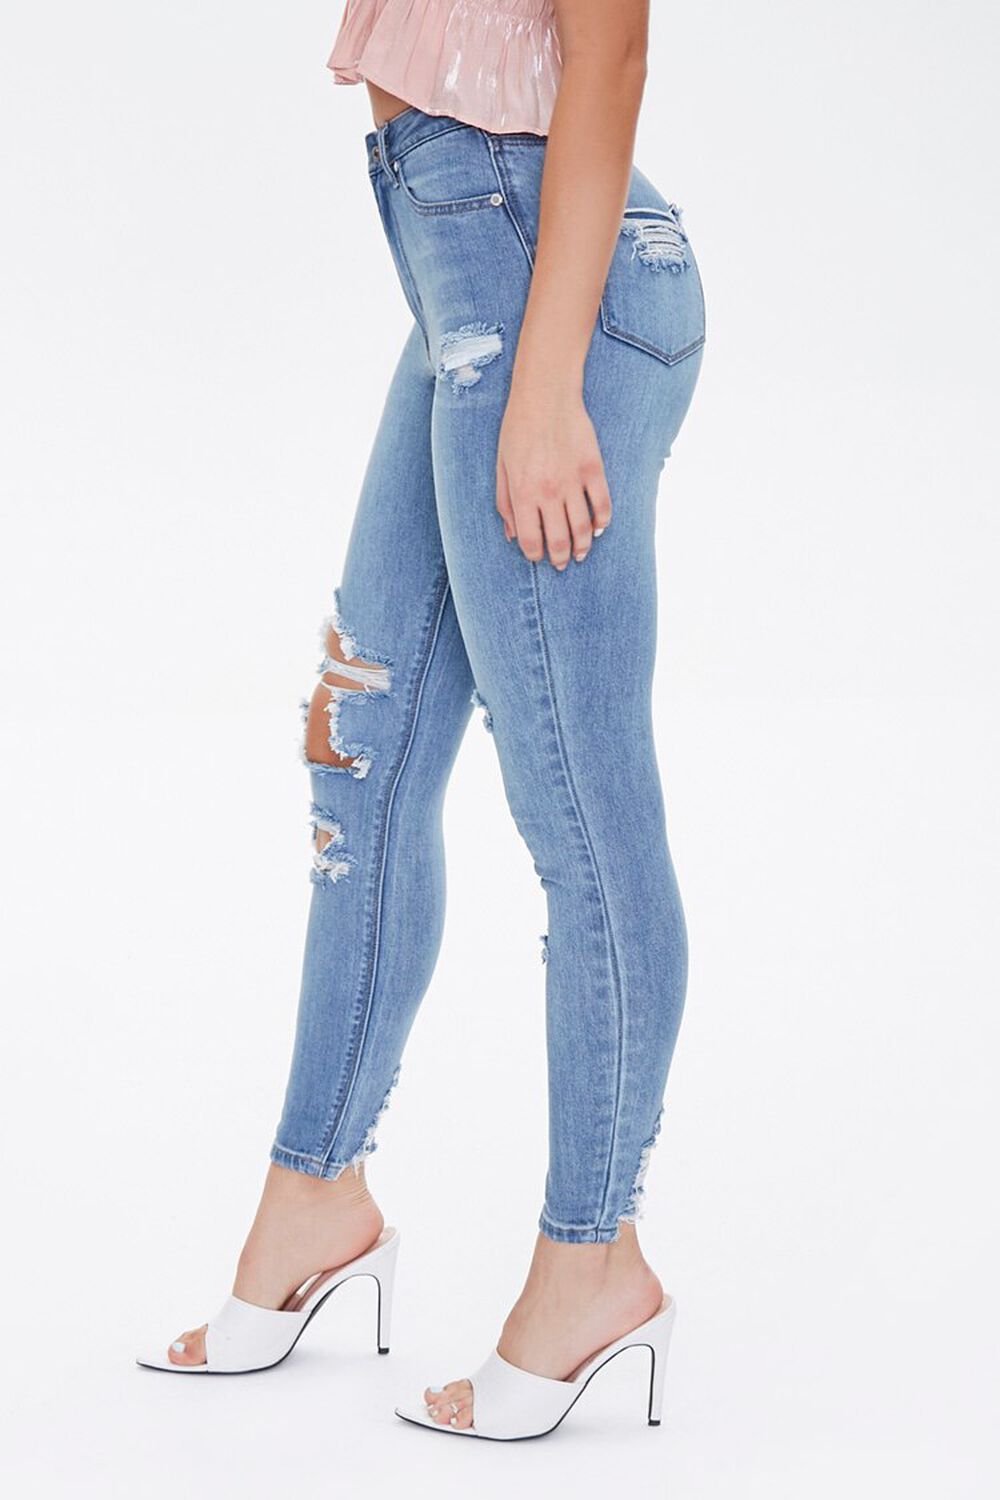 MEDIUM DENIM Curvy Fit High-Rise Jeans, image 3